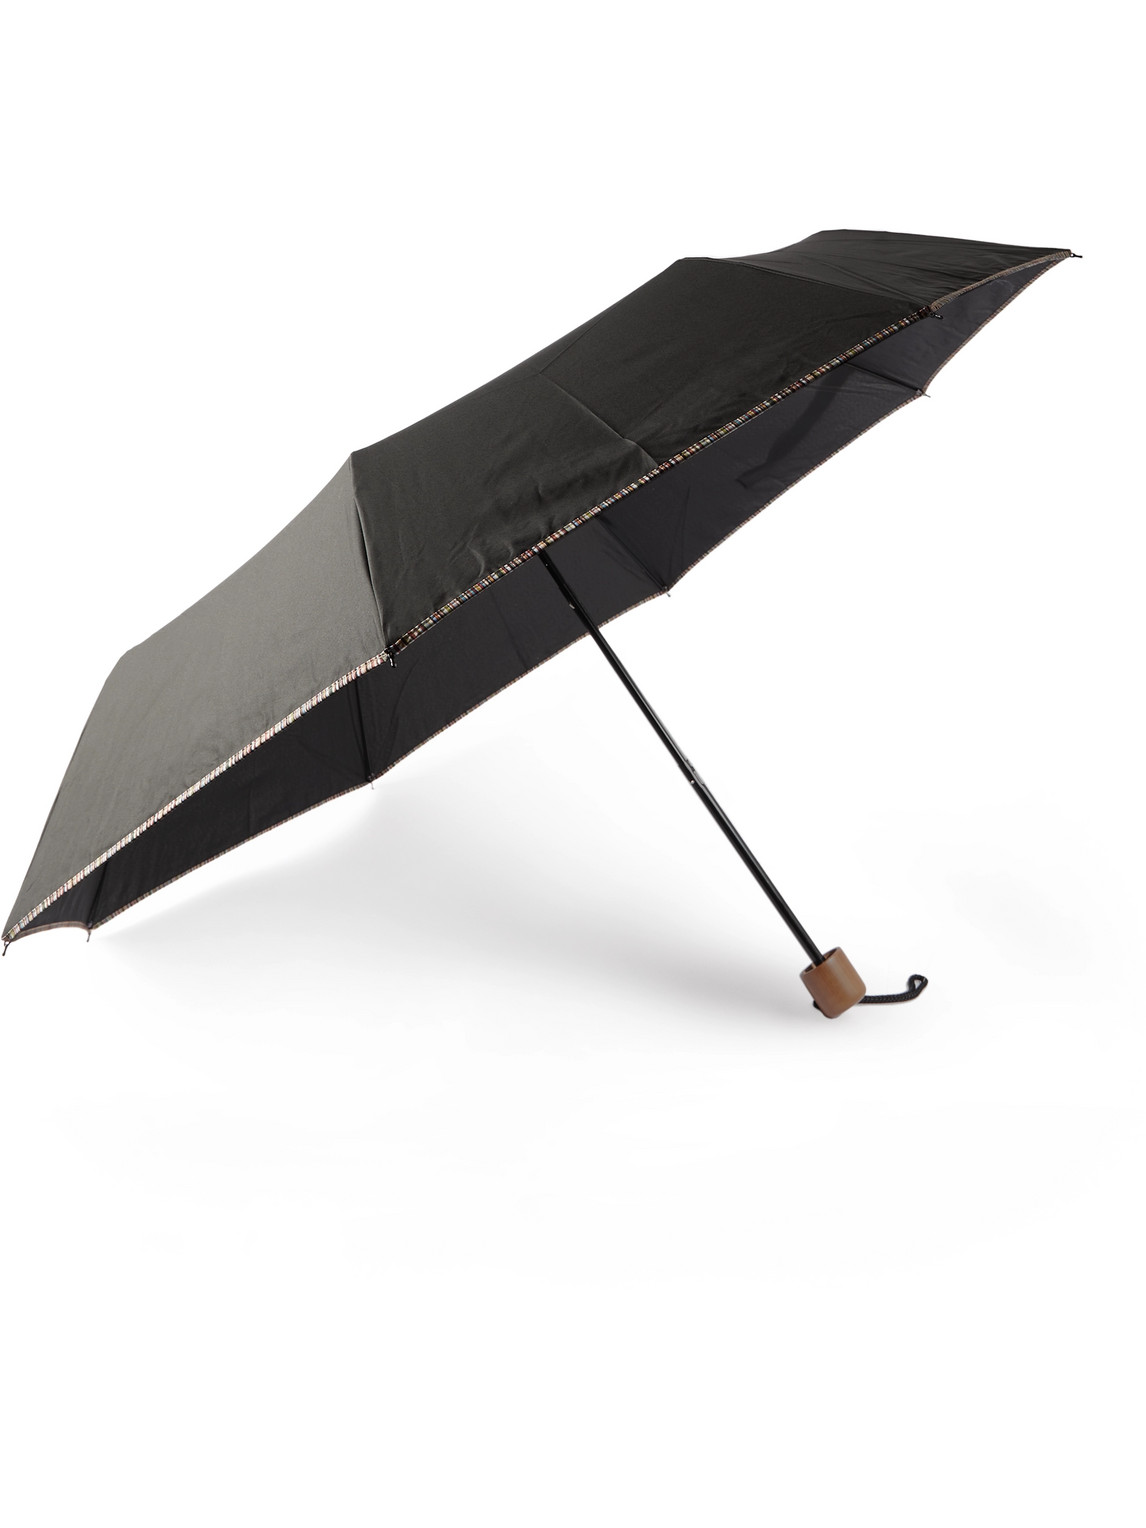 Paul Smith - Contrast-Tipped Wood-Handle Fold-Up Umbrella - Men - Black von Paul Smith